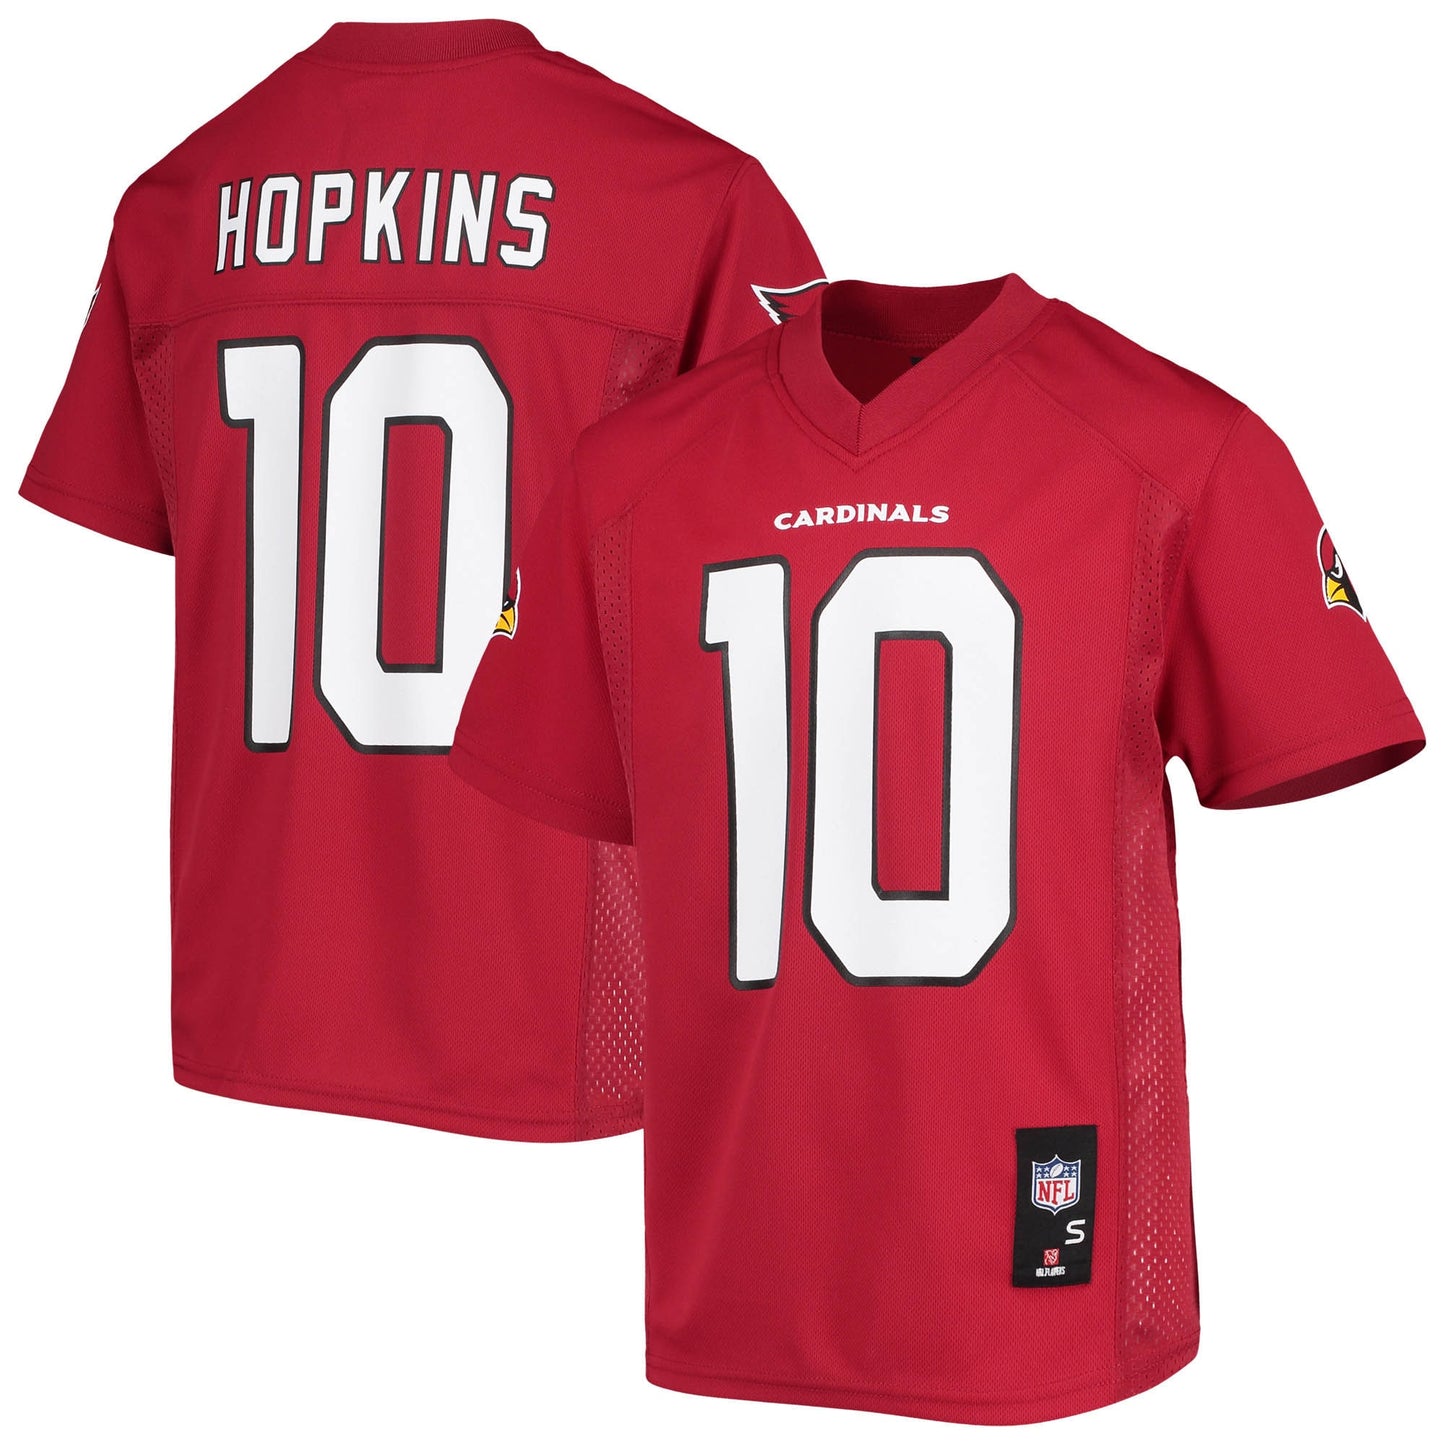 DeAndre Hopkins Arizona Cardinals Youth Replica Player Jersey - Cardinal